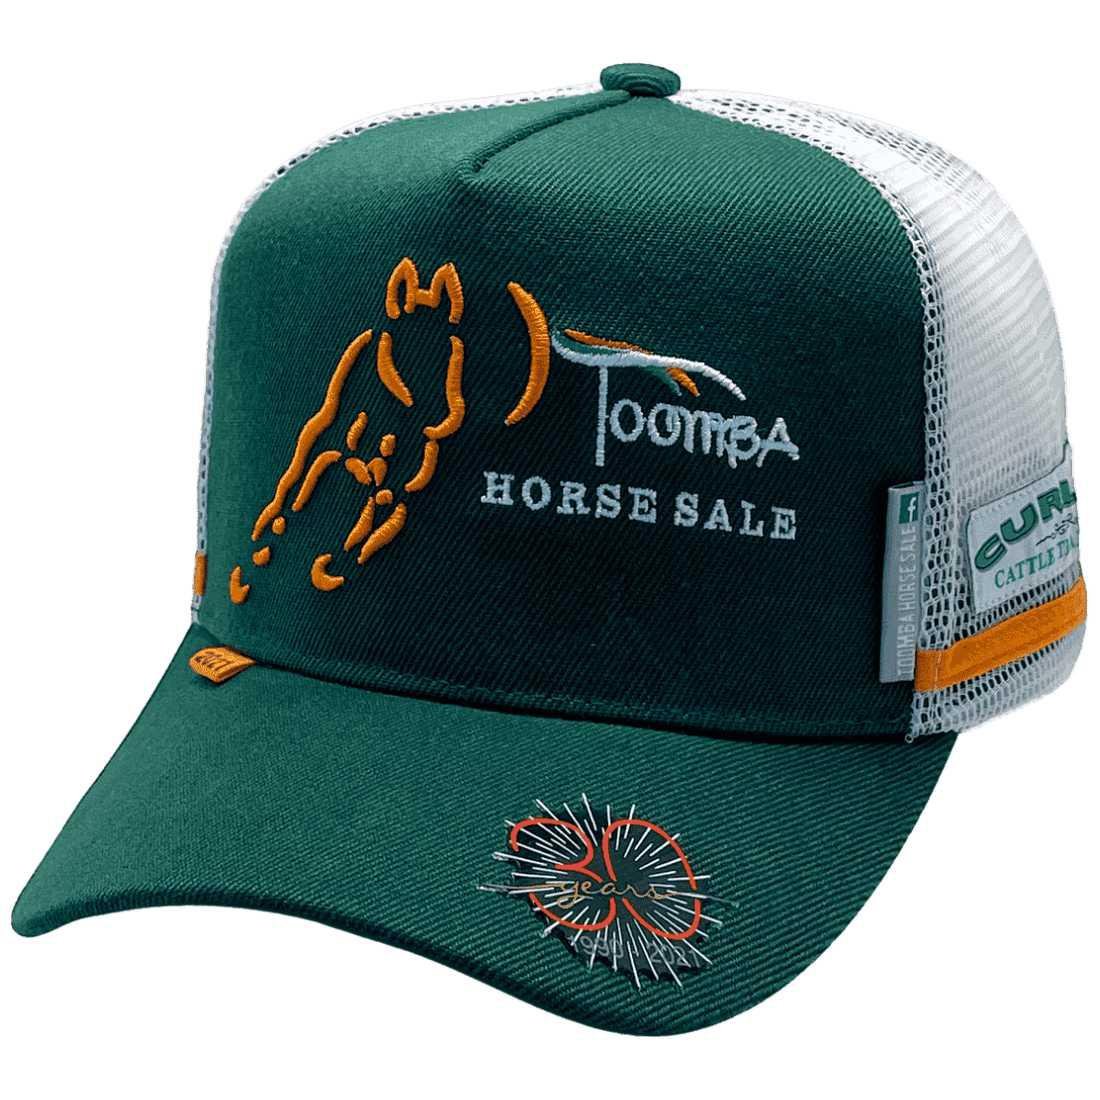 Toomba Horse Sale - Power Aussie Trucker Hat - Bottle Green HP Acrylic